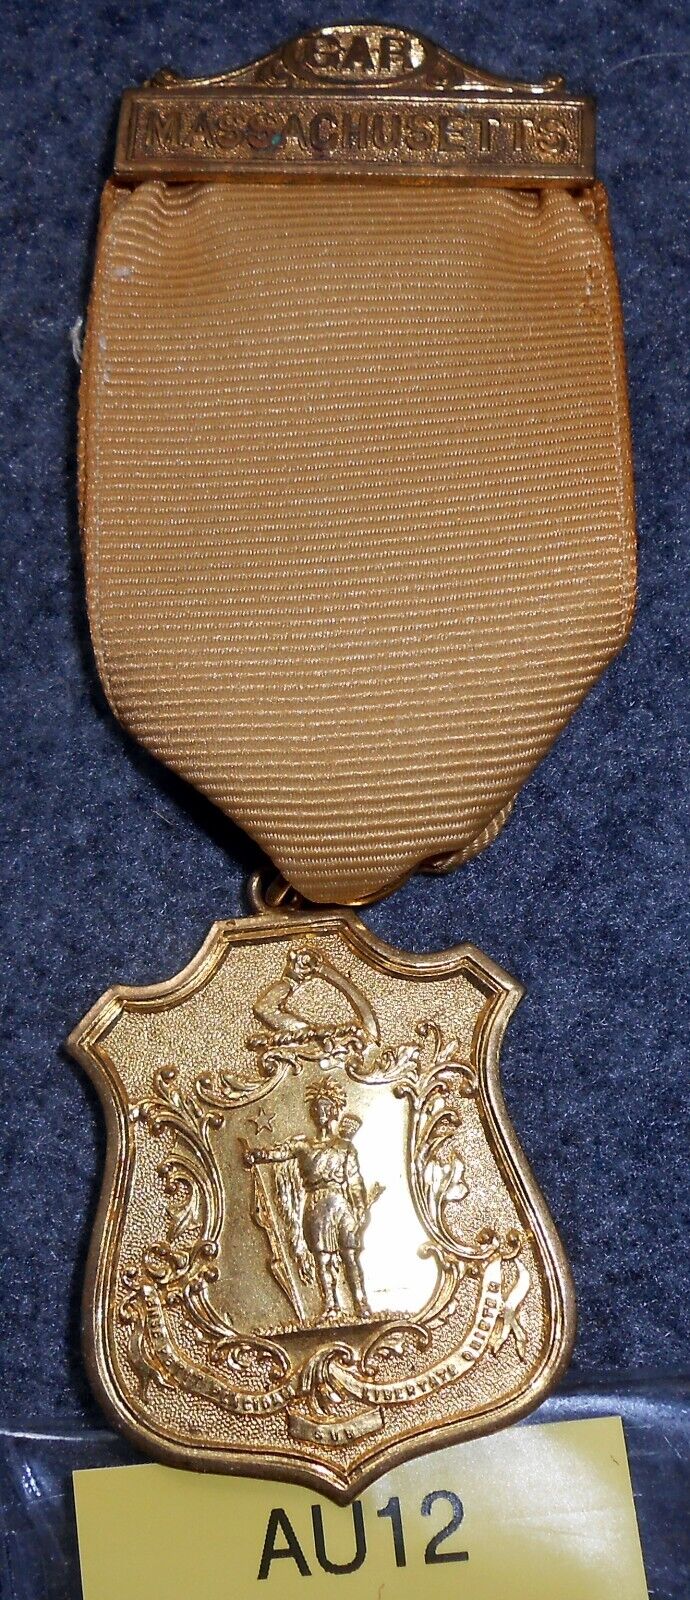 AU12  G.A.R. Medal 1892 department of Massachusetts